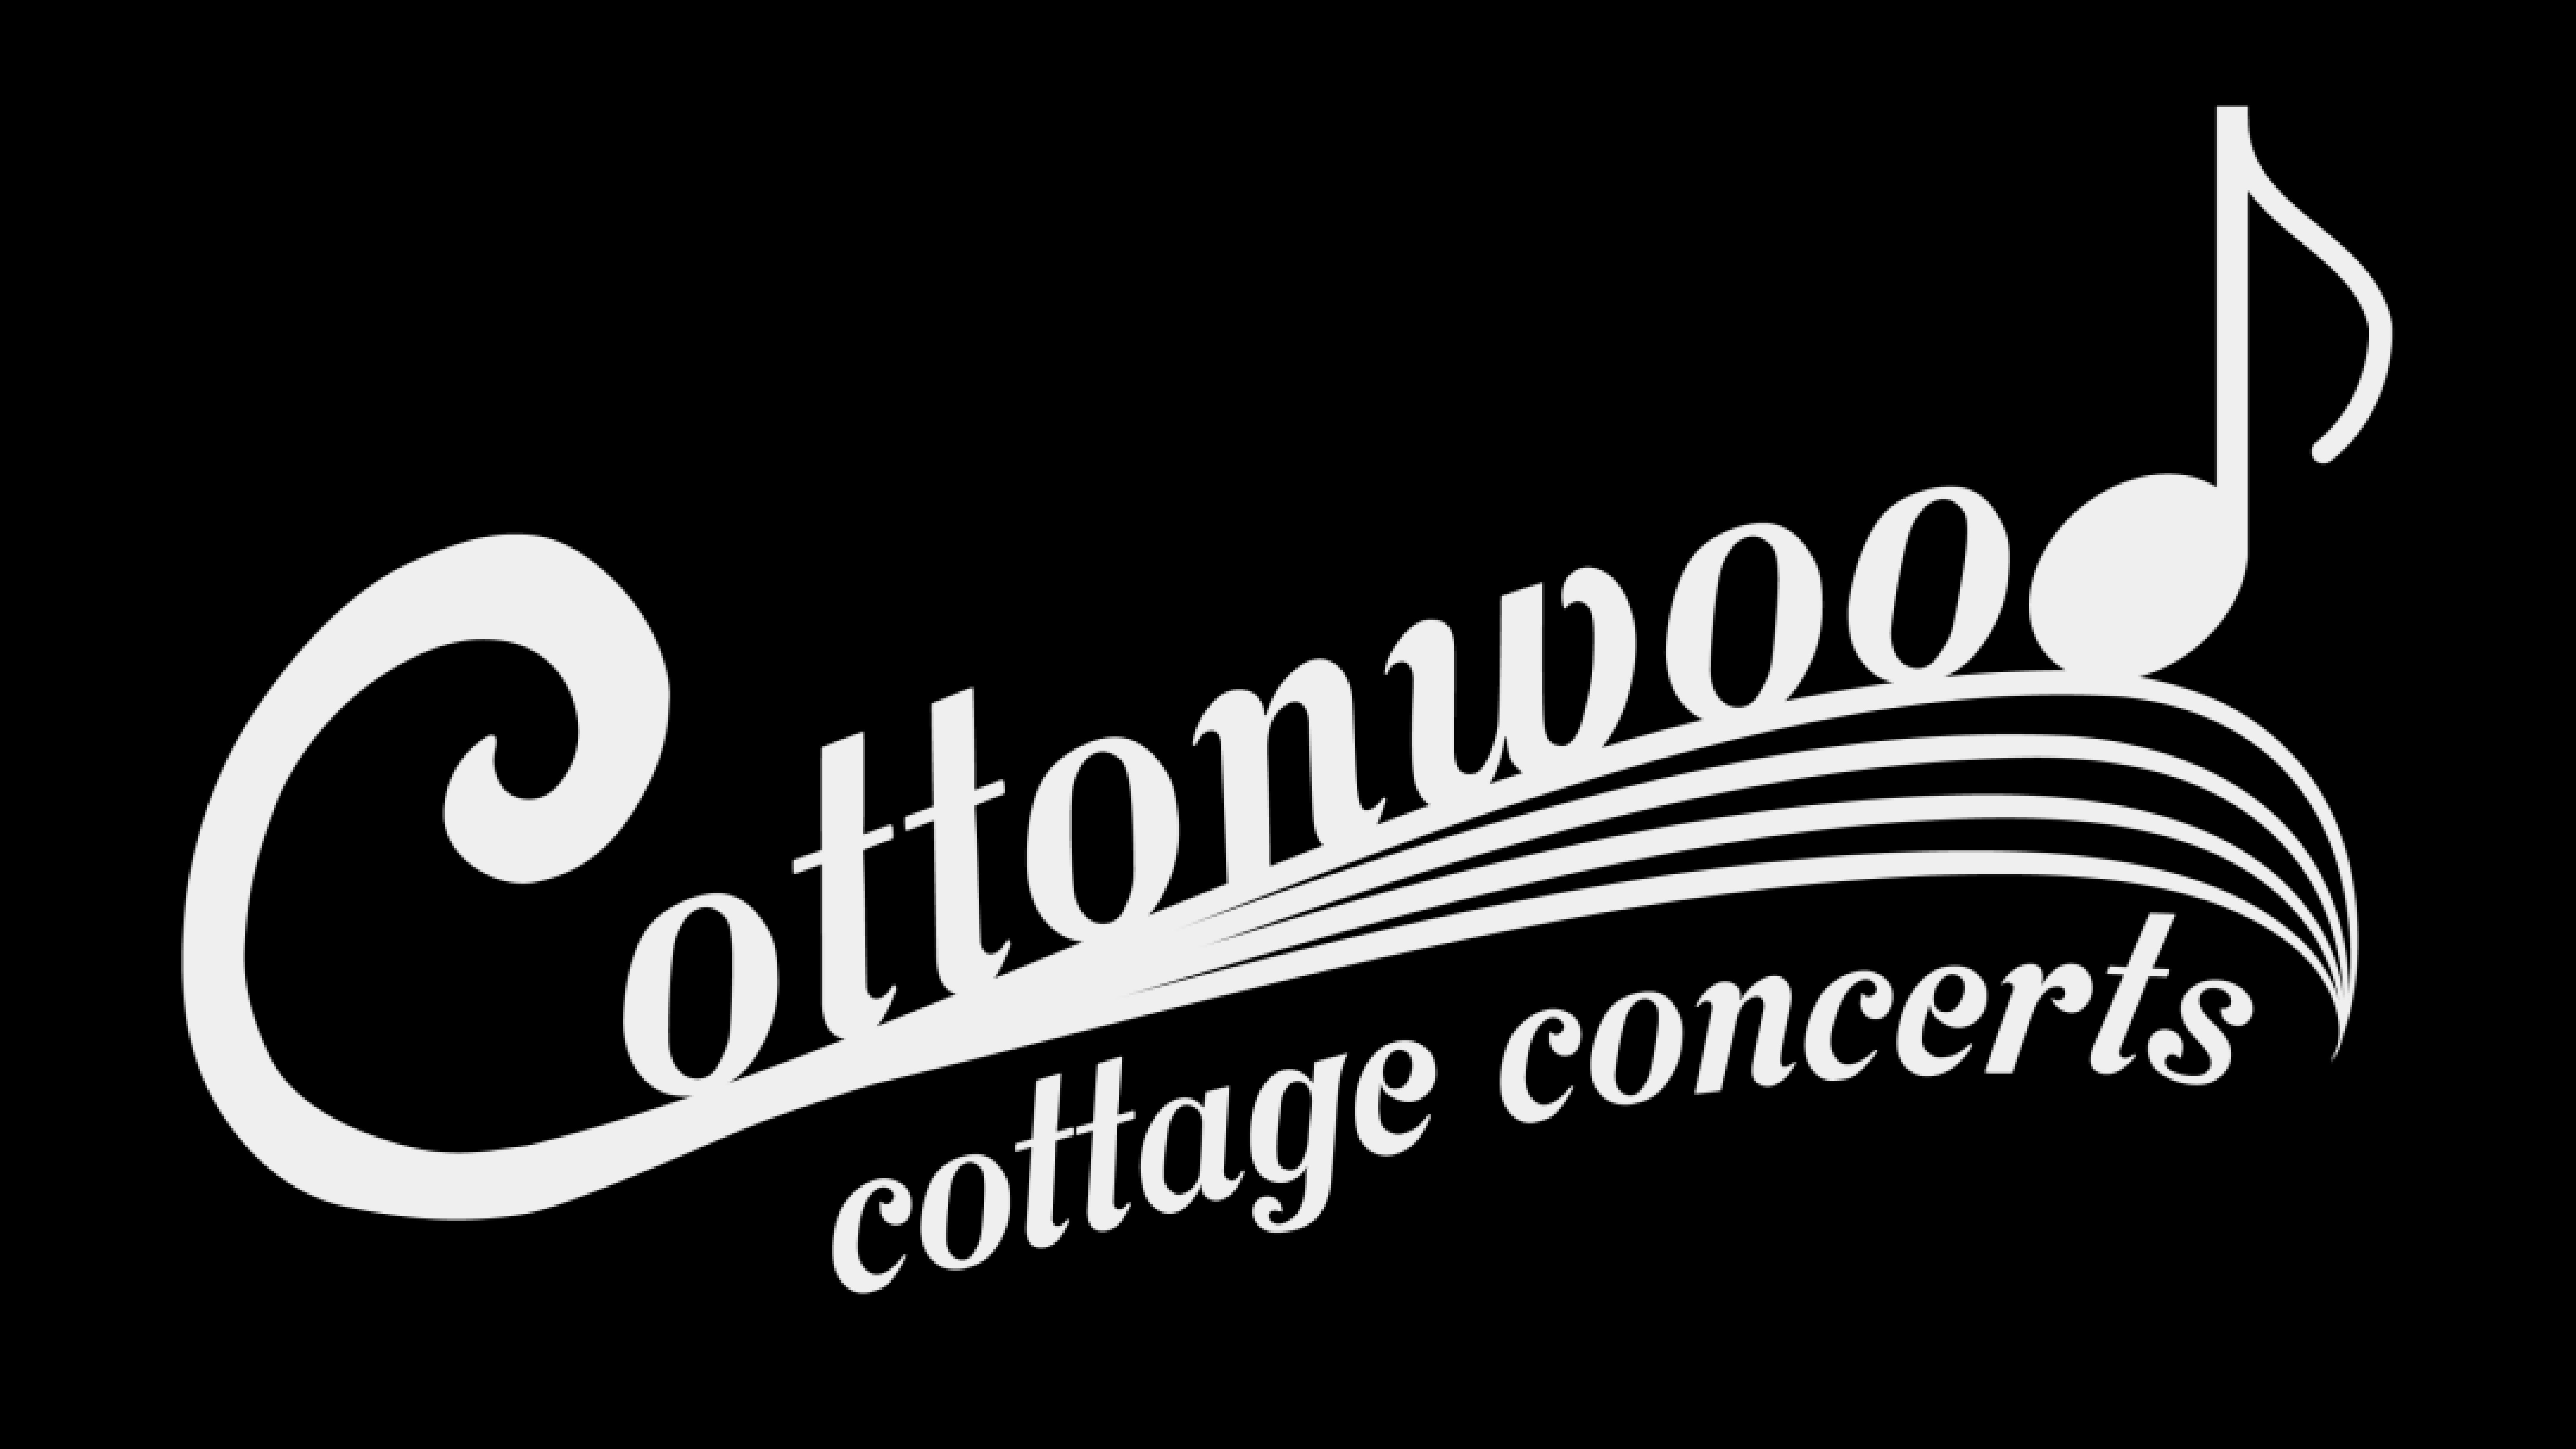 Cottonwood Cottage Concerts